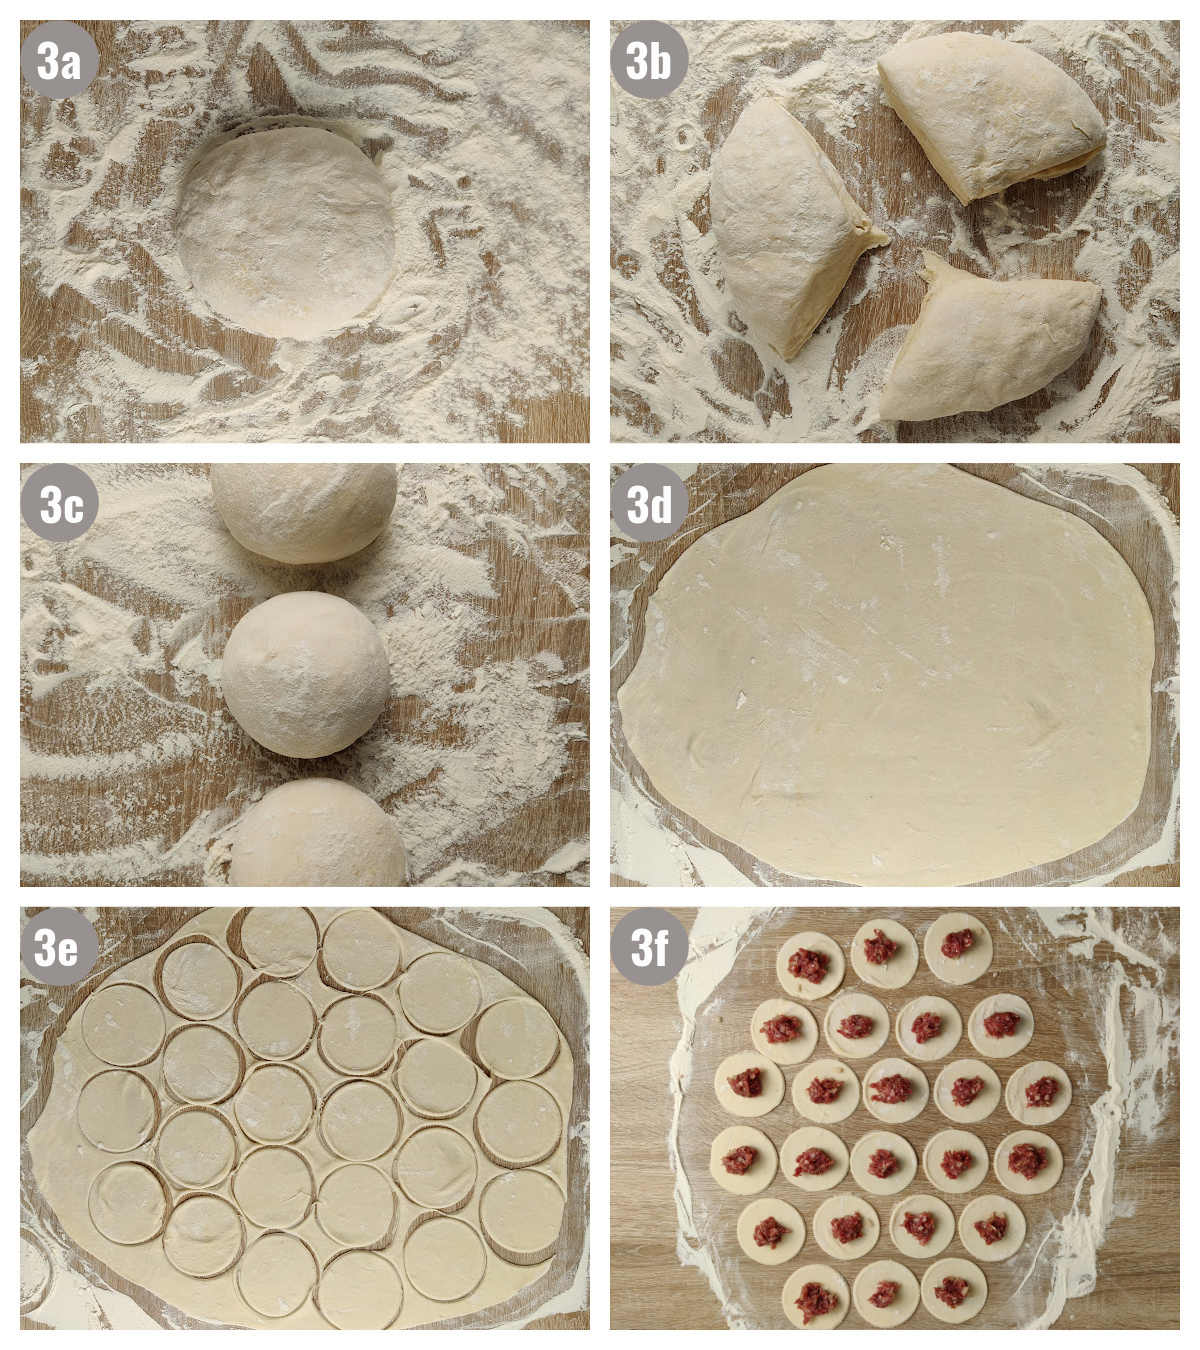 Six photos of beef dumplings process.